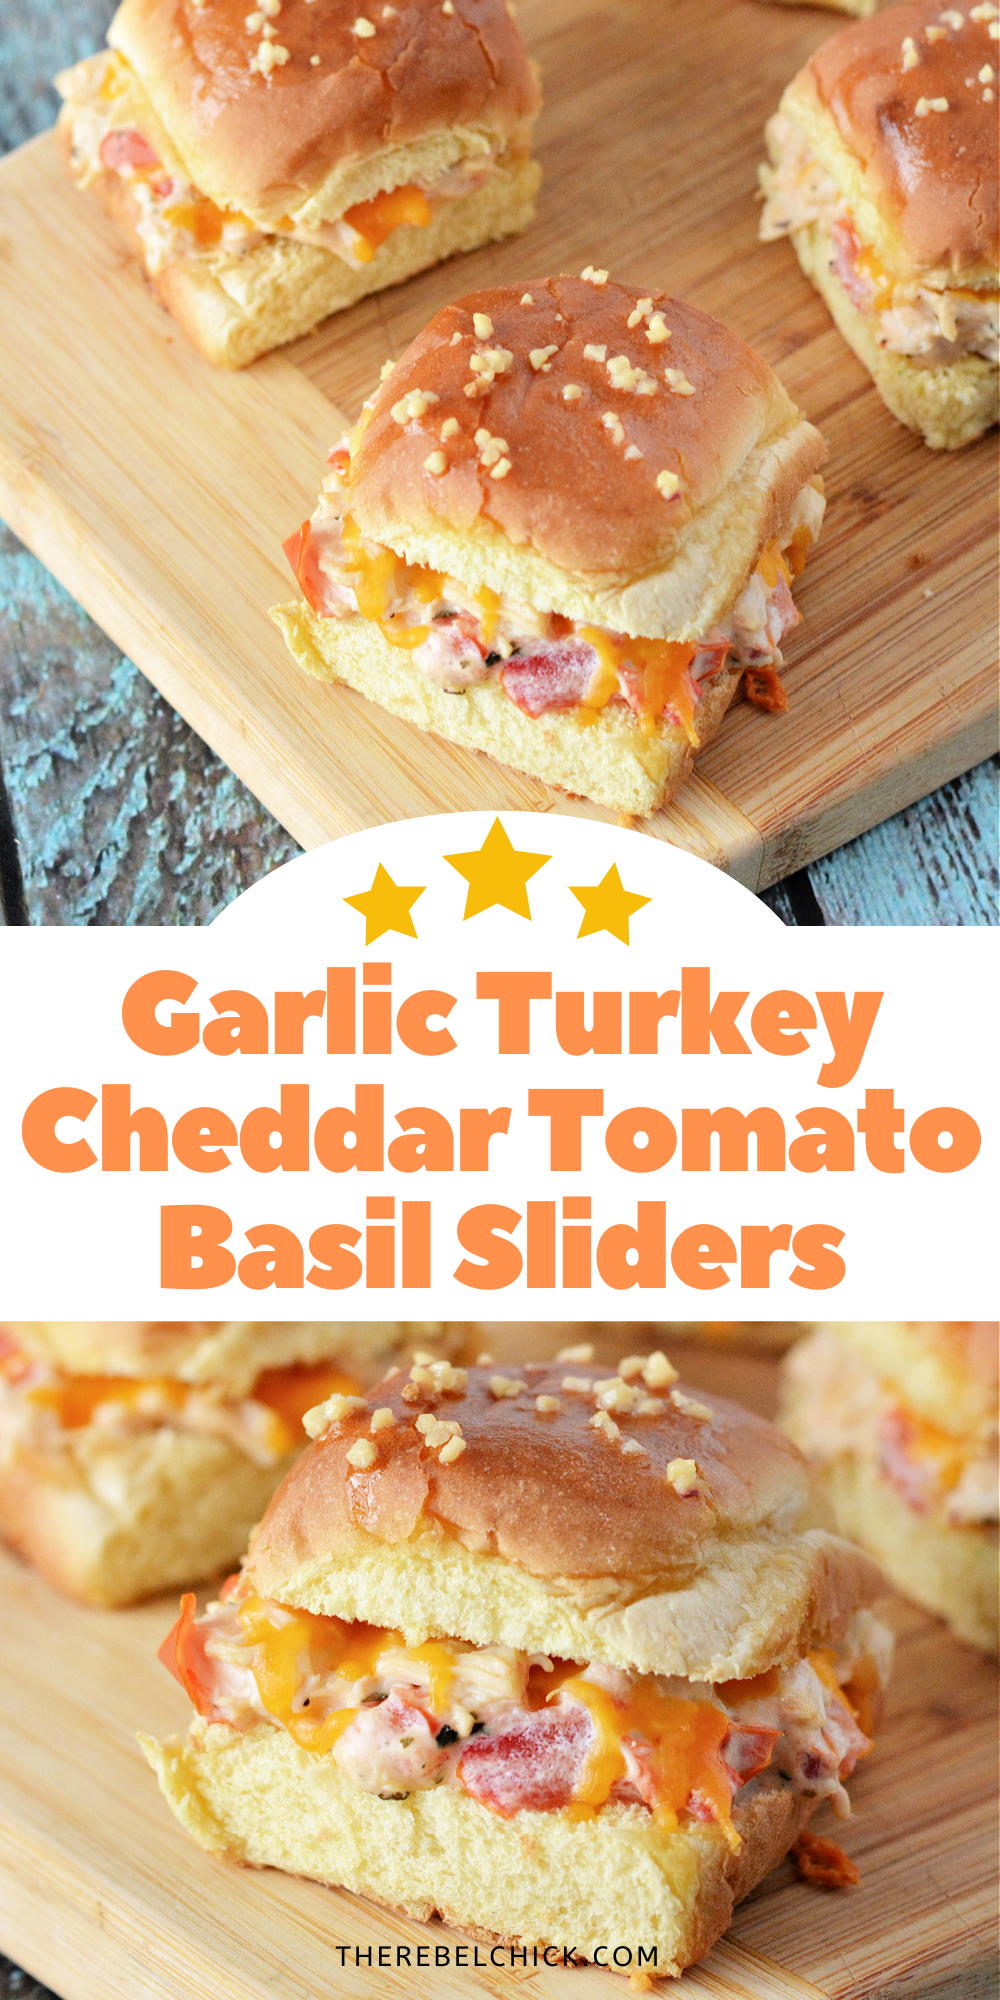 Garlic Turkey Cheddar Tomato Basil Sliders Recipe